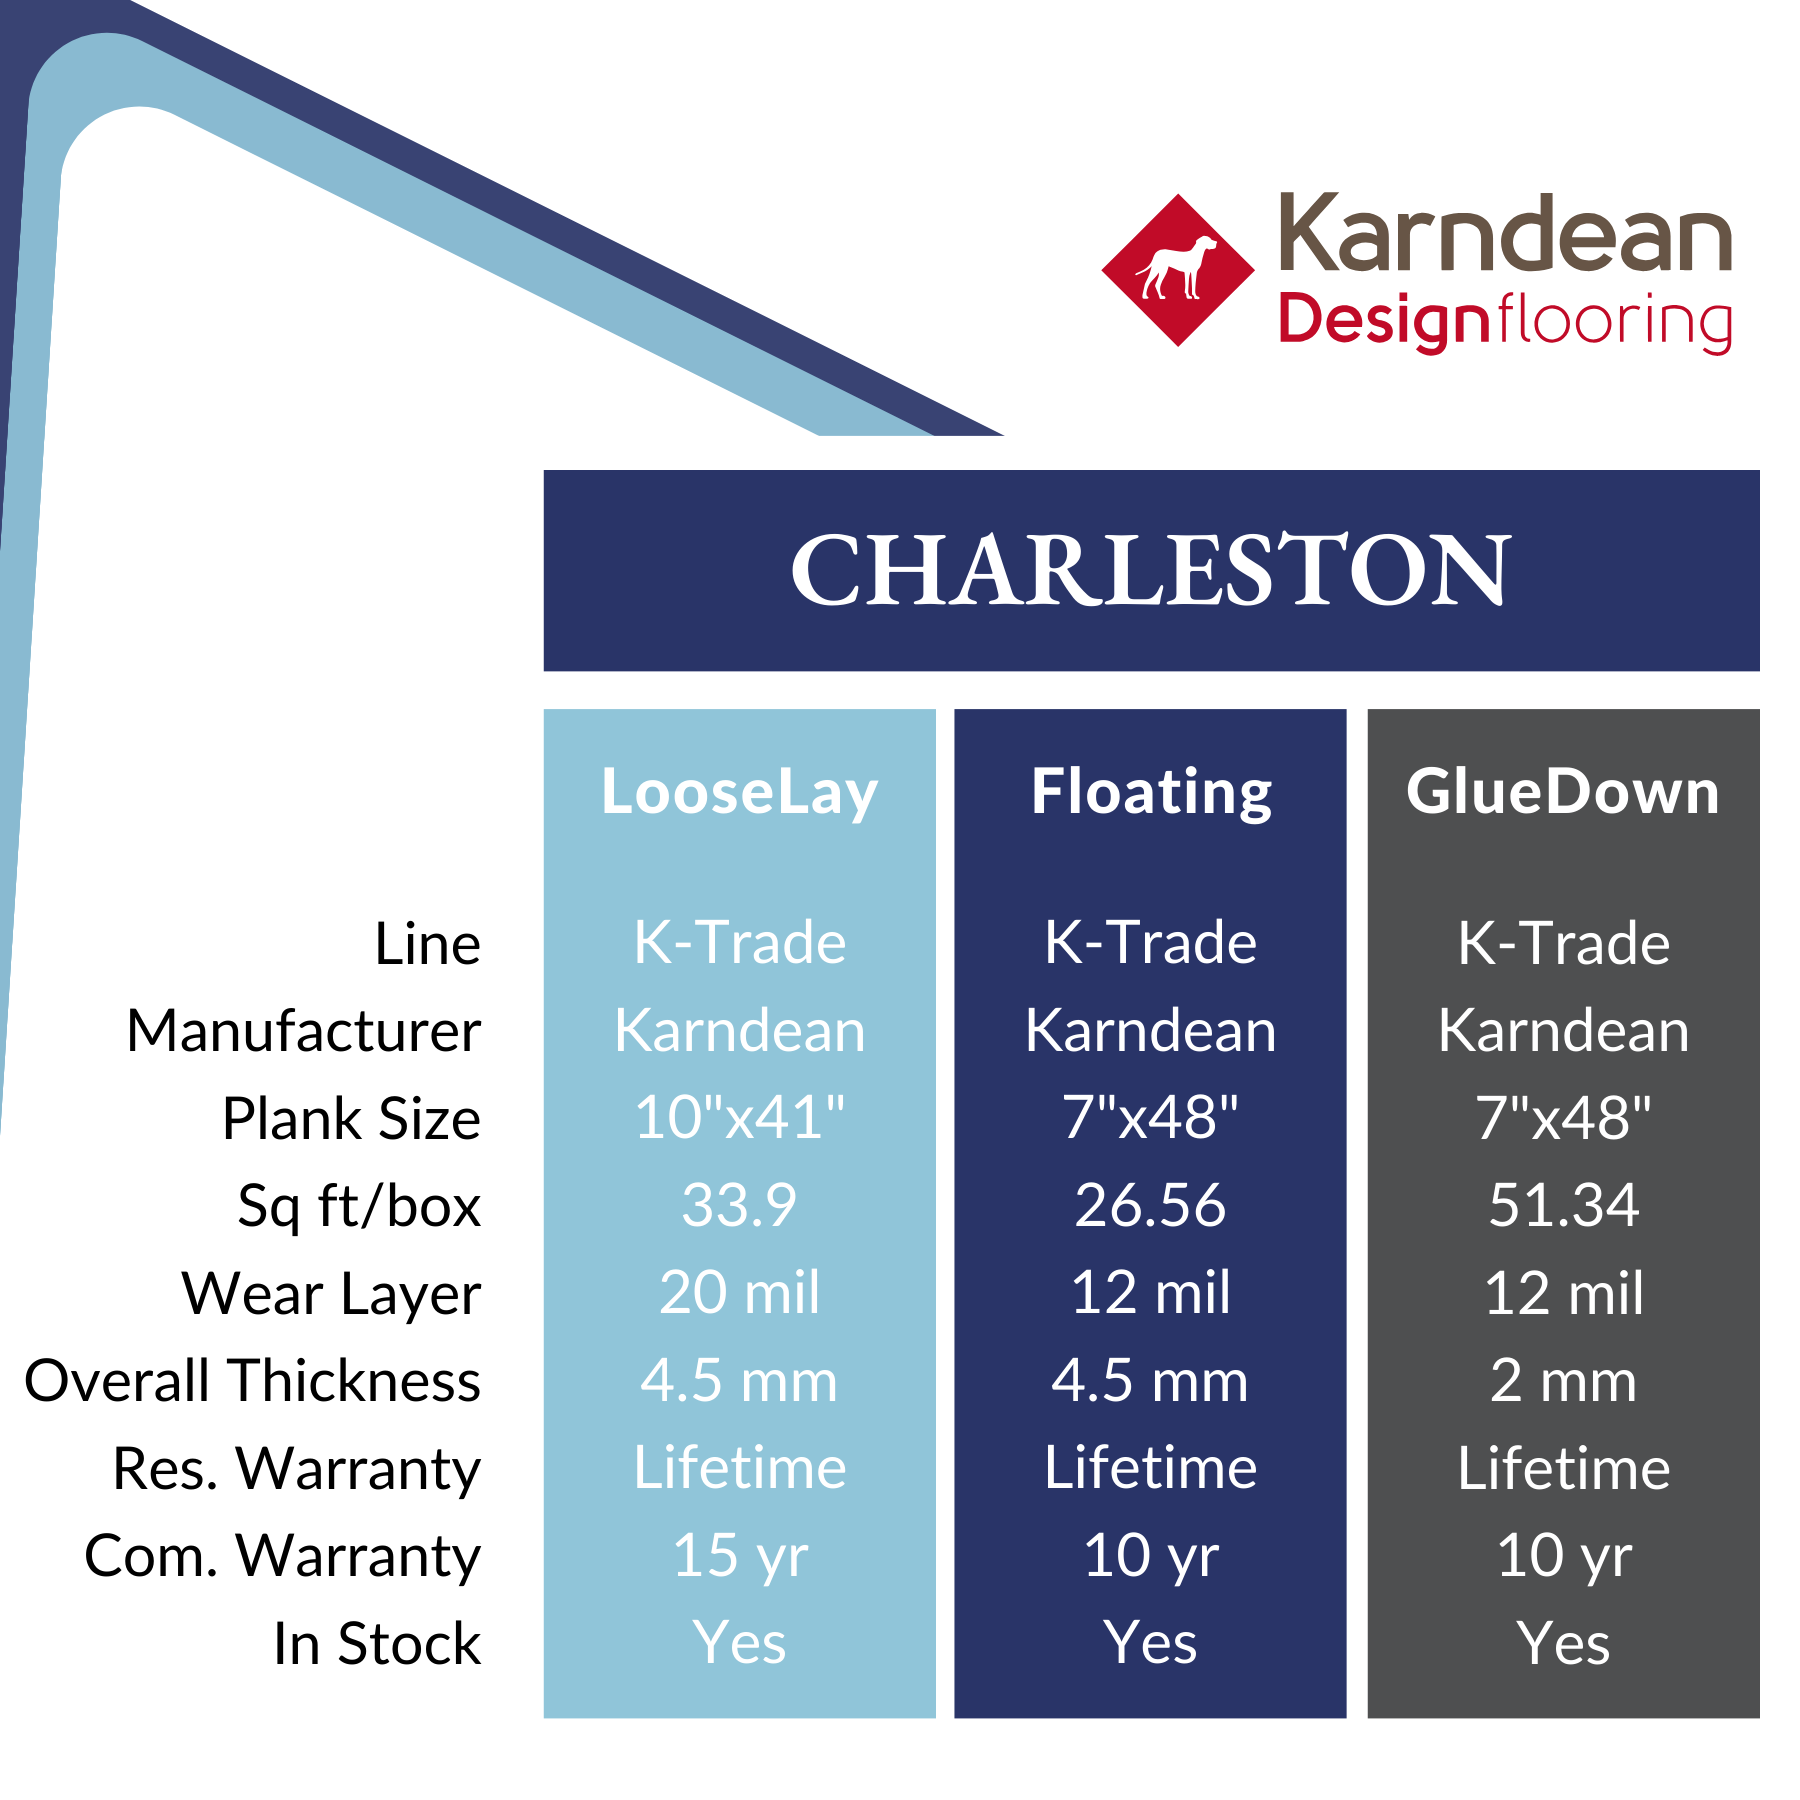 Charleston by Karndean: 20 mil wear layer, Calhoun's Springfield